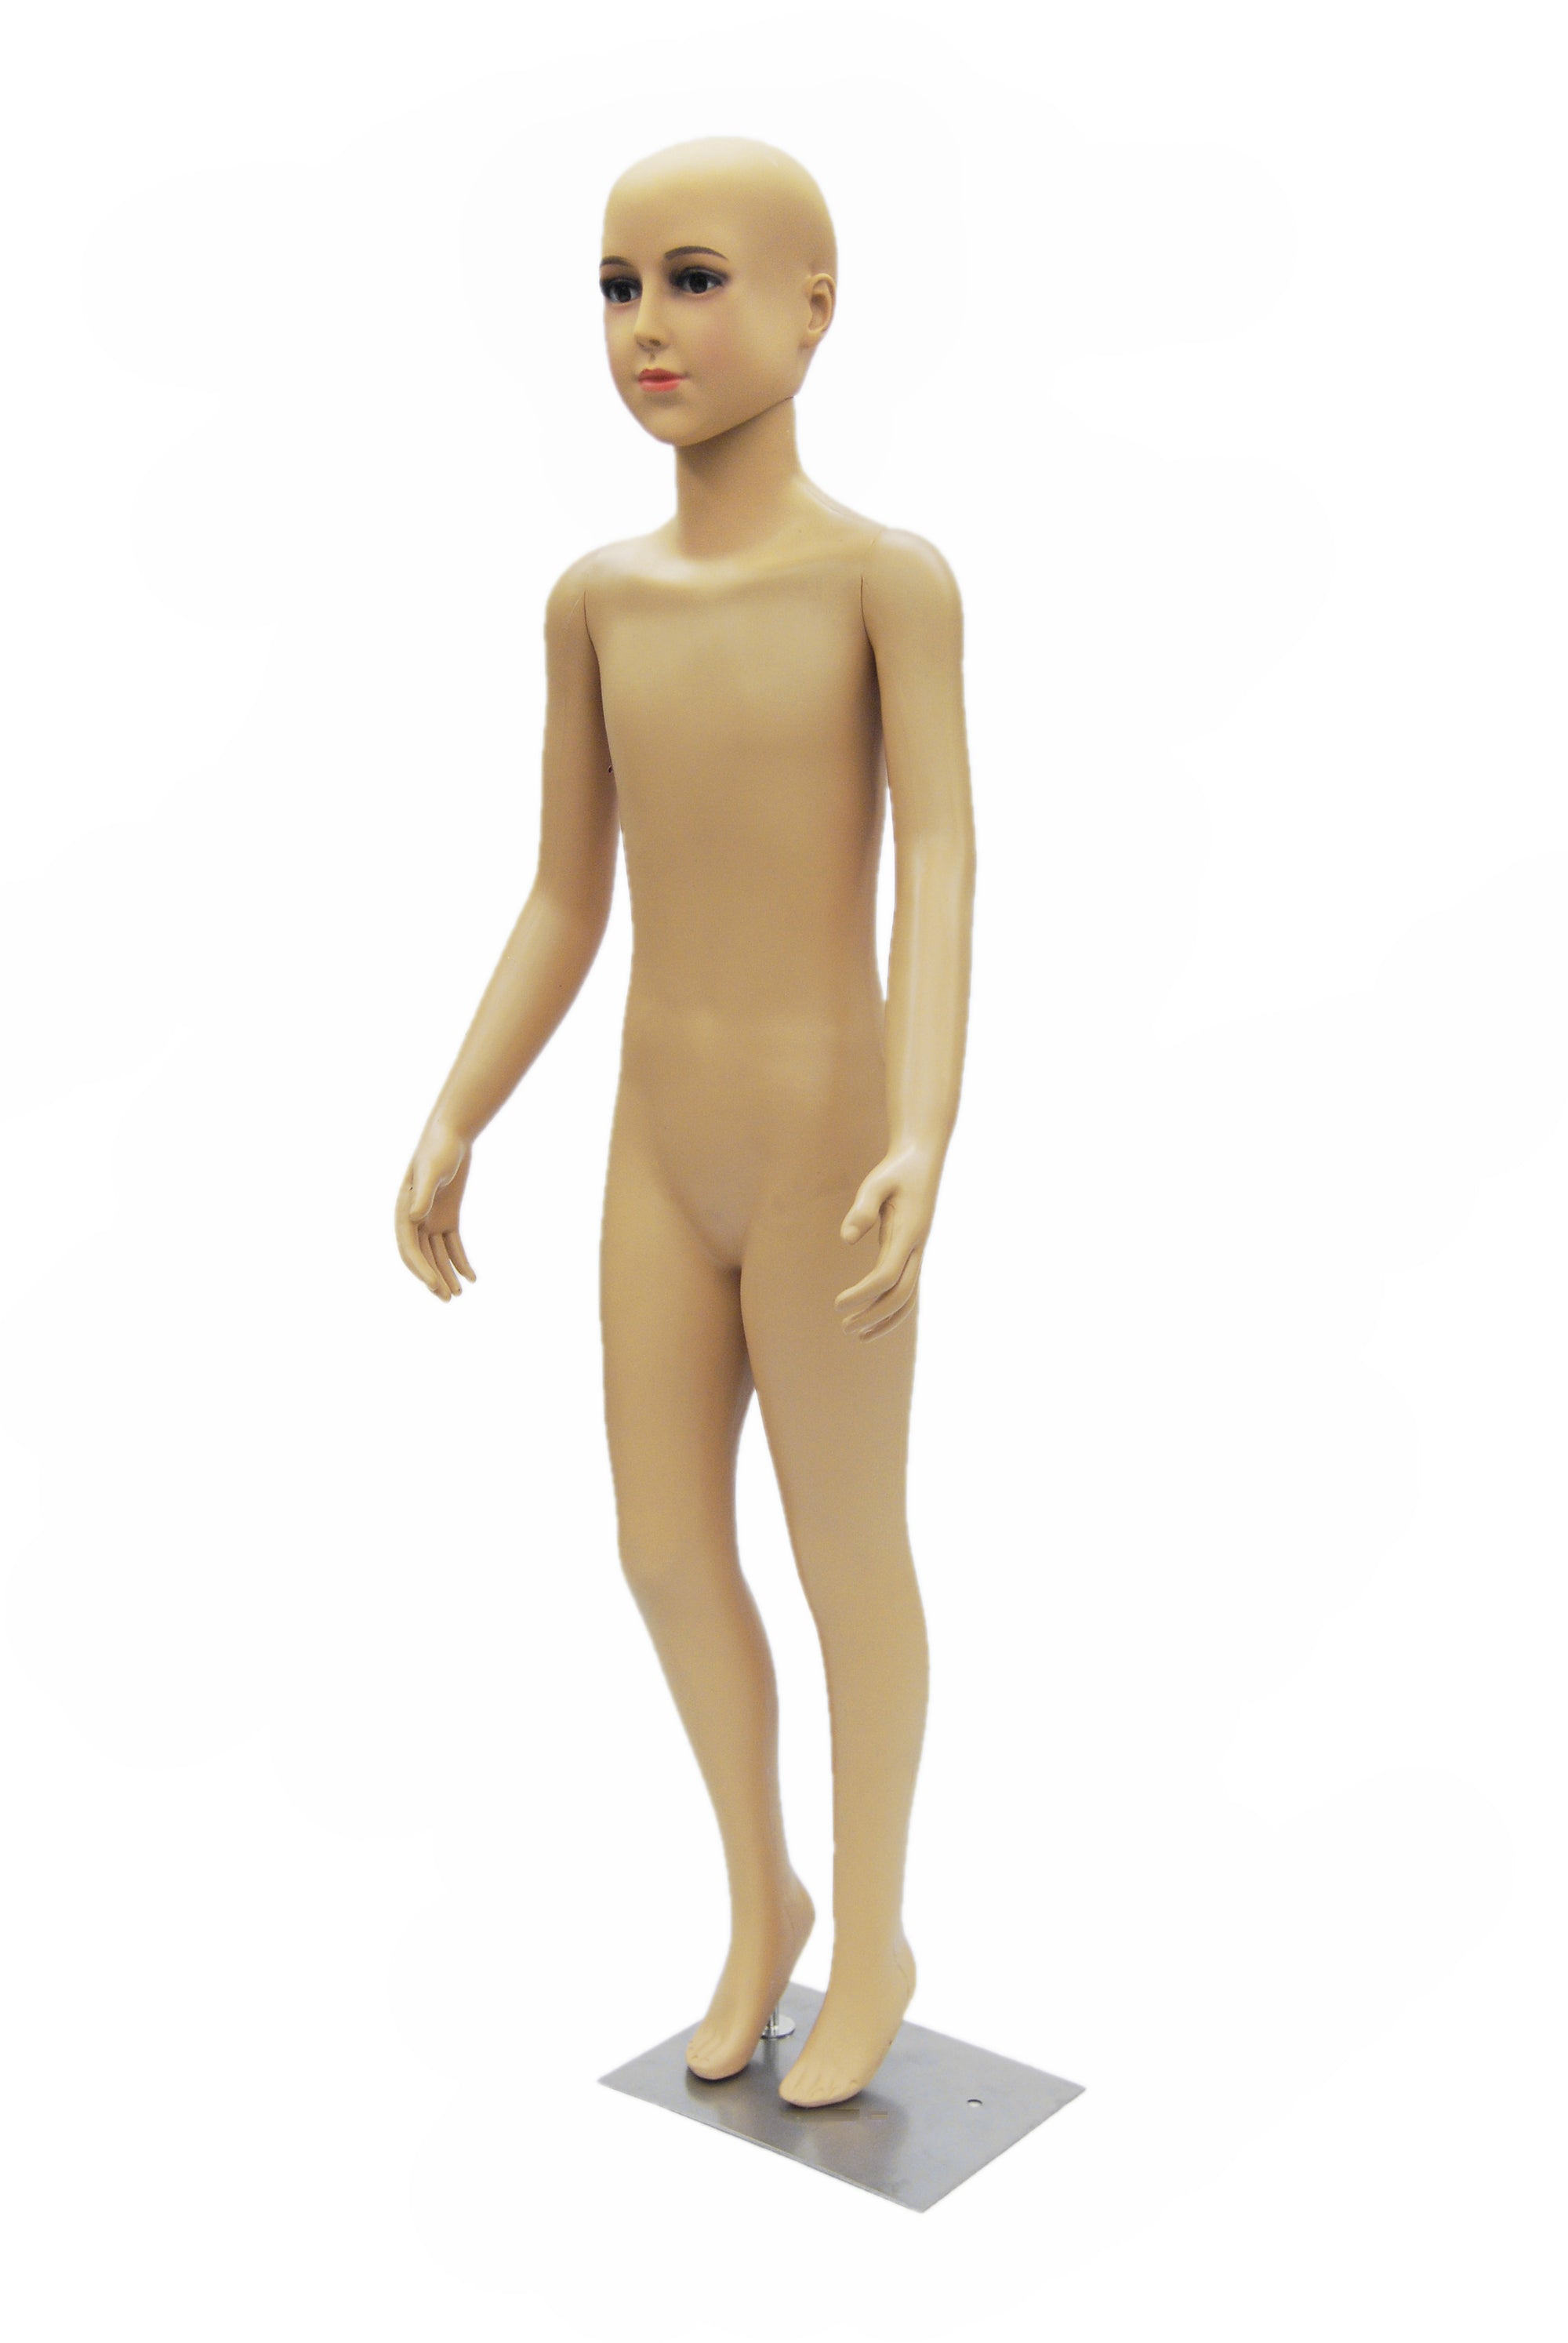 Child Plastic Mannequin, 7-8 year old $98.00